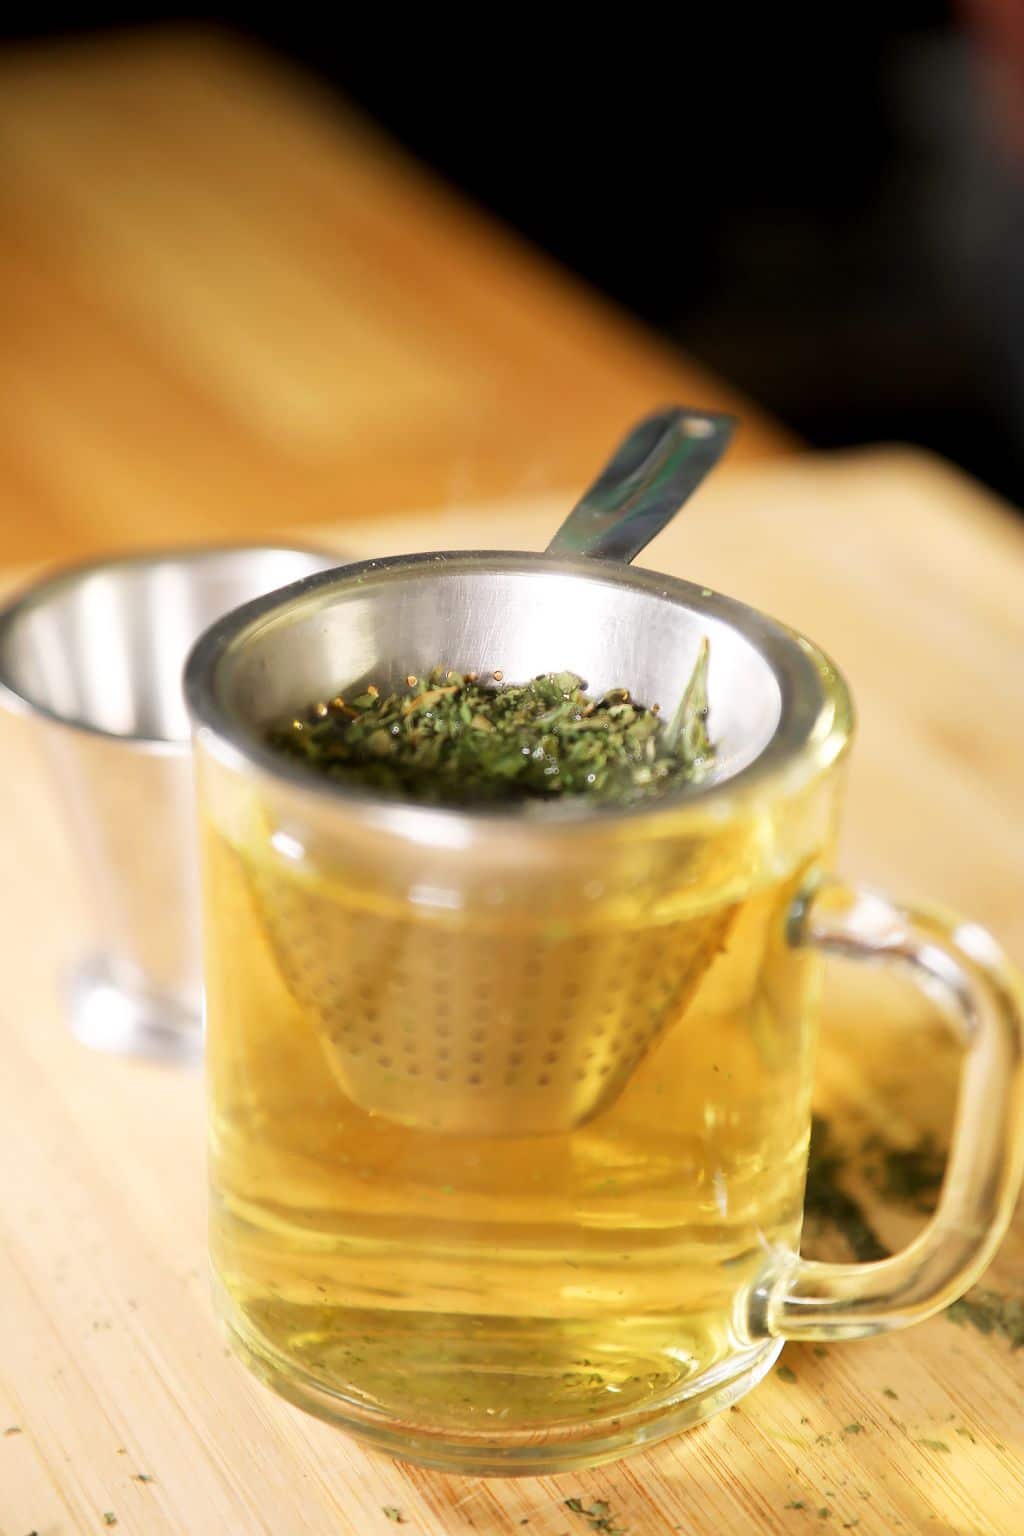 How to Make Mint Tea